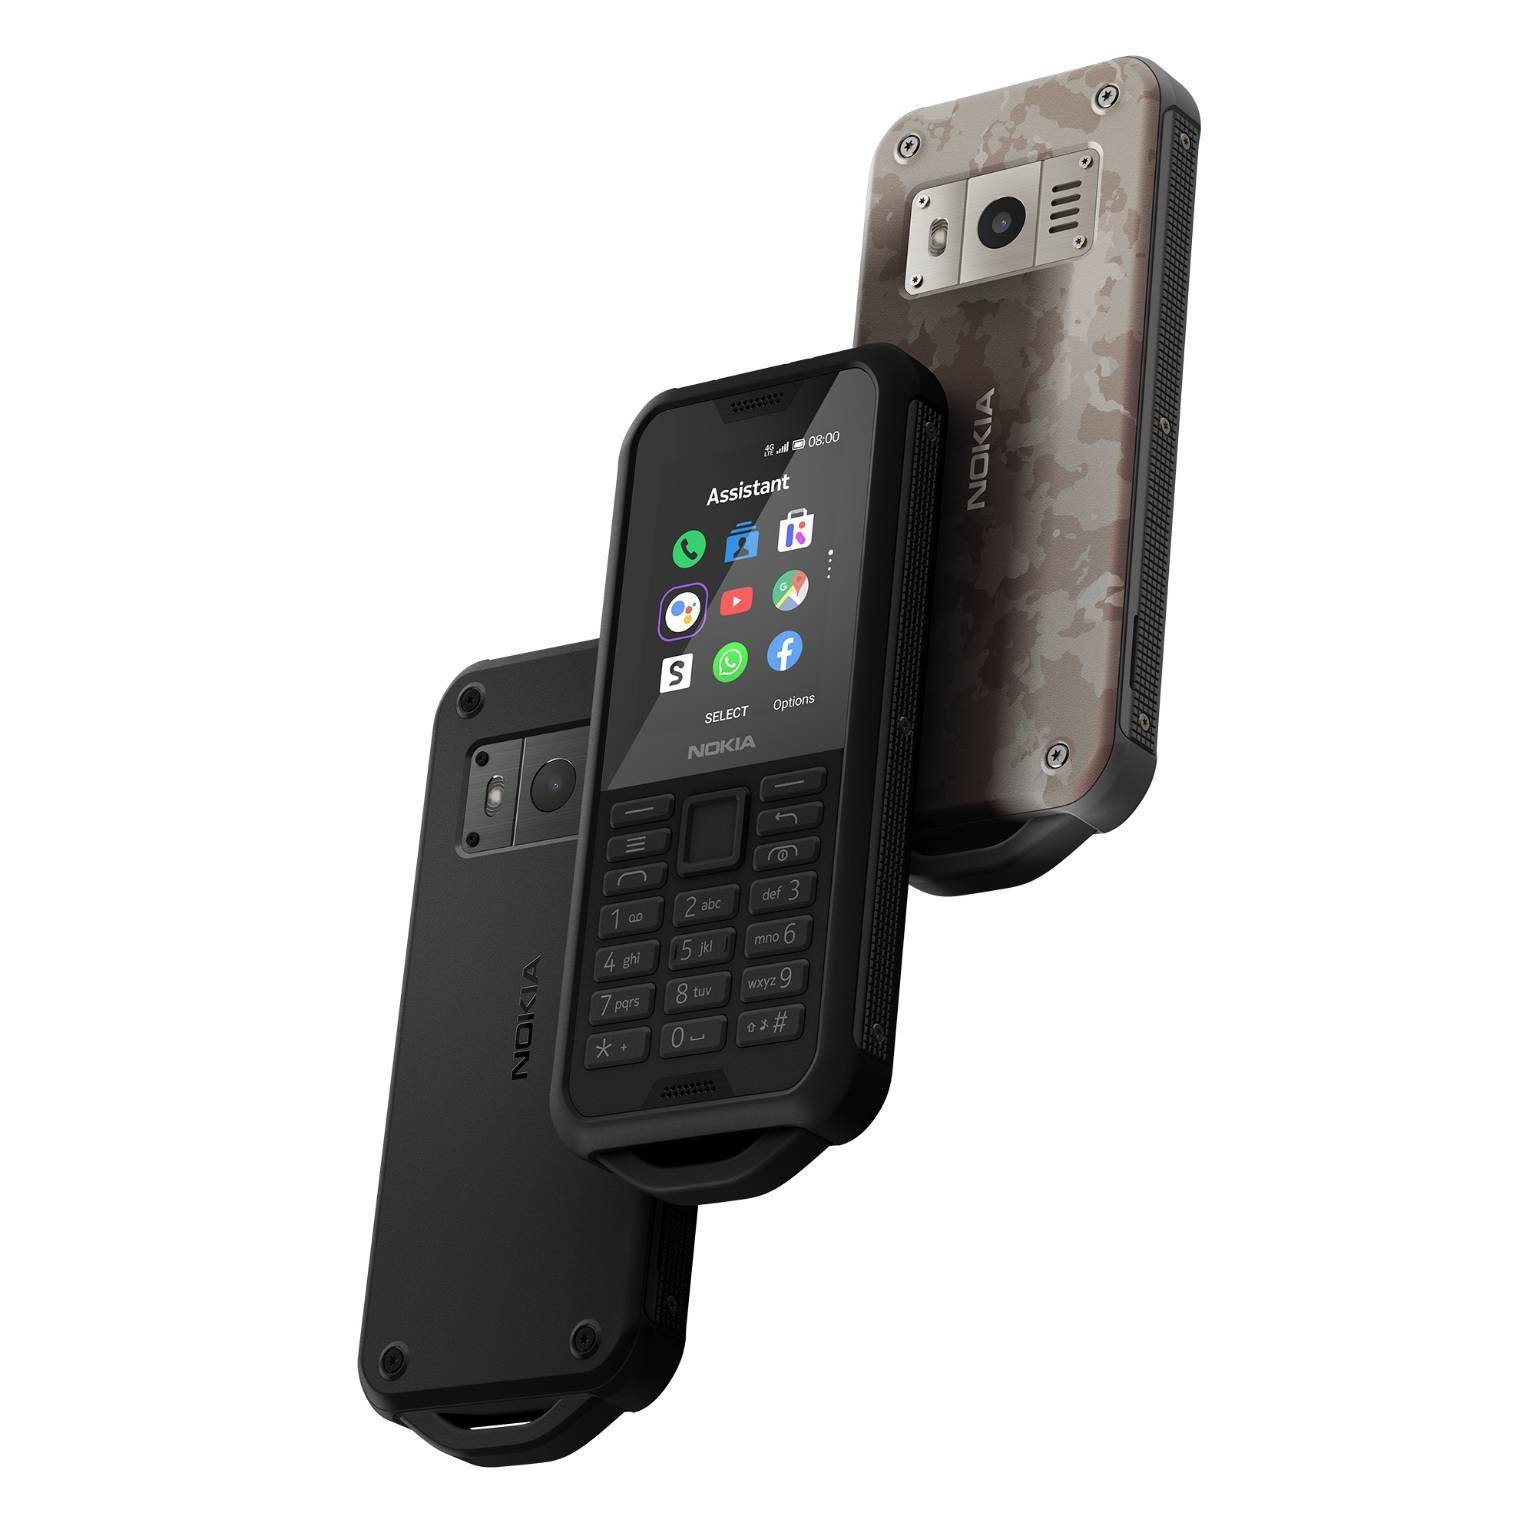 Immagine di Nokia 800 Tough, il feature phone rugged su Amazon Italia a 129 euro